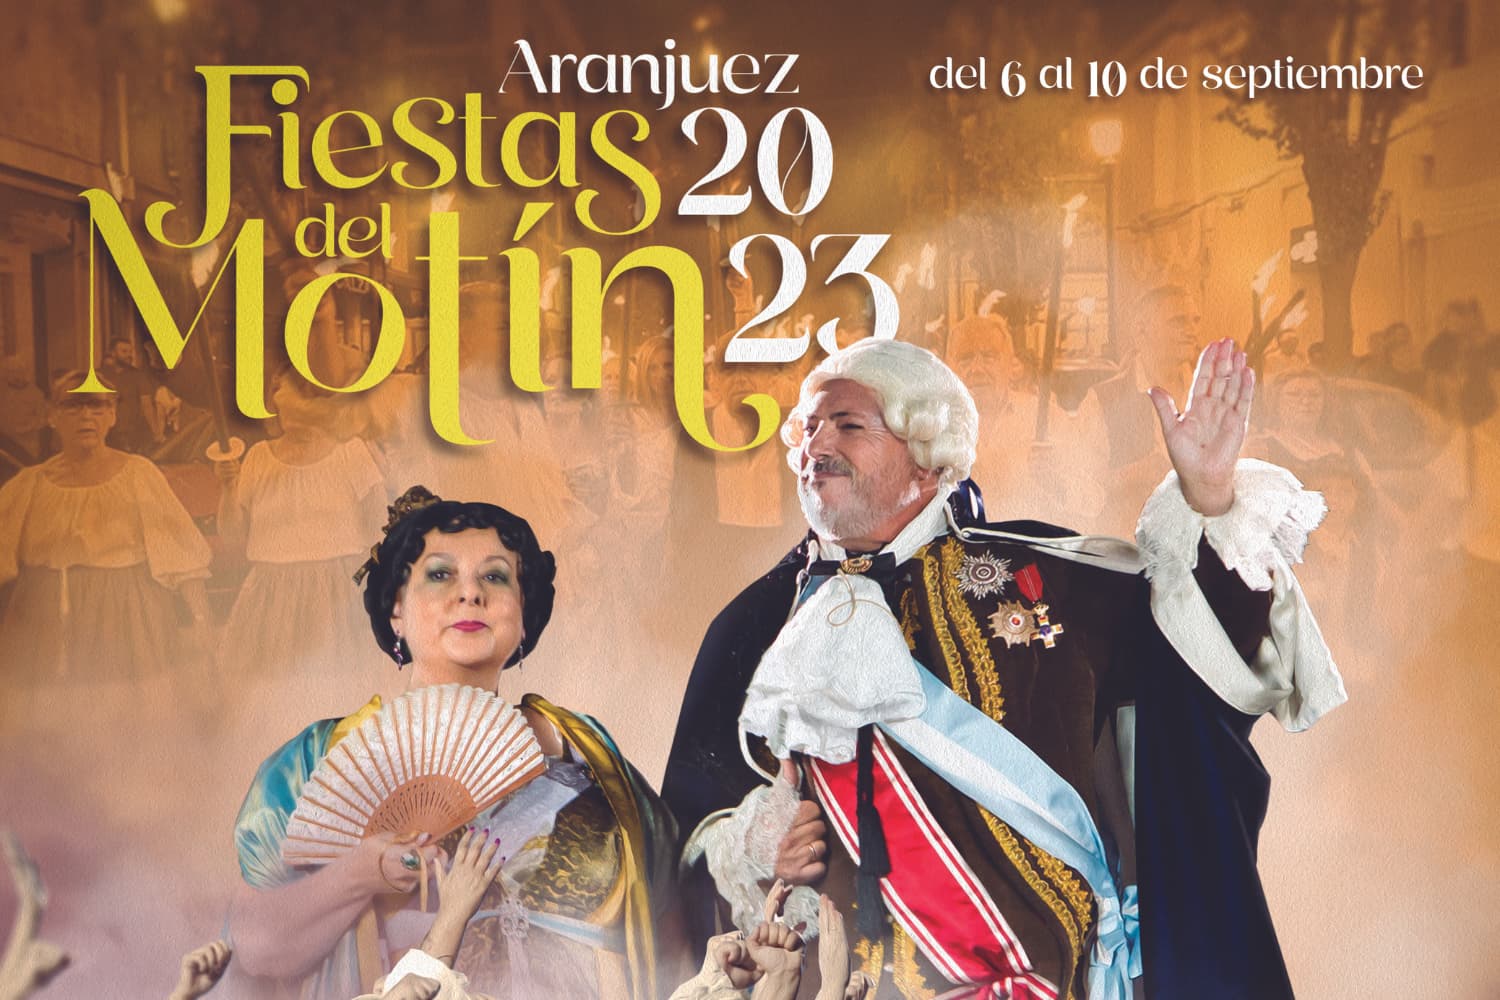 Aranjuez celebrates its Motín Festivities 